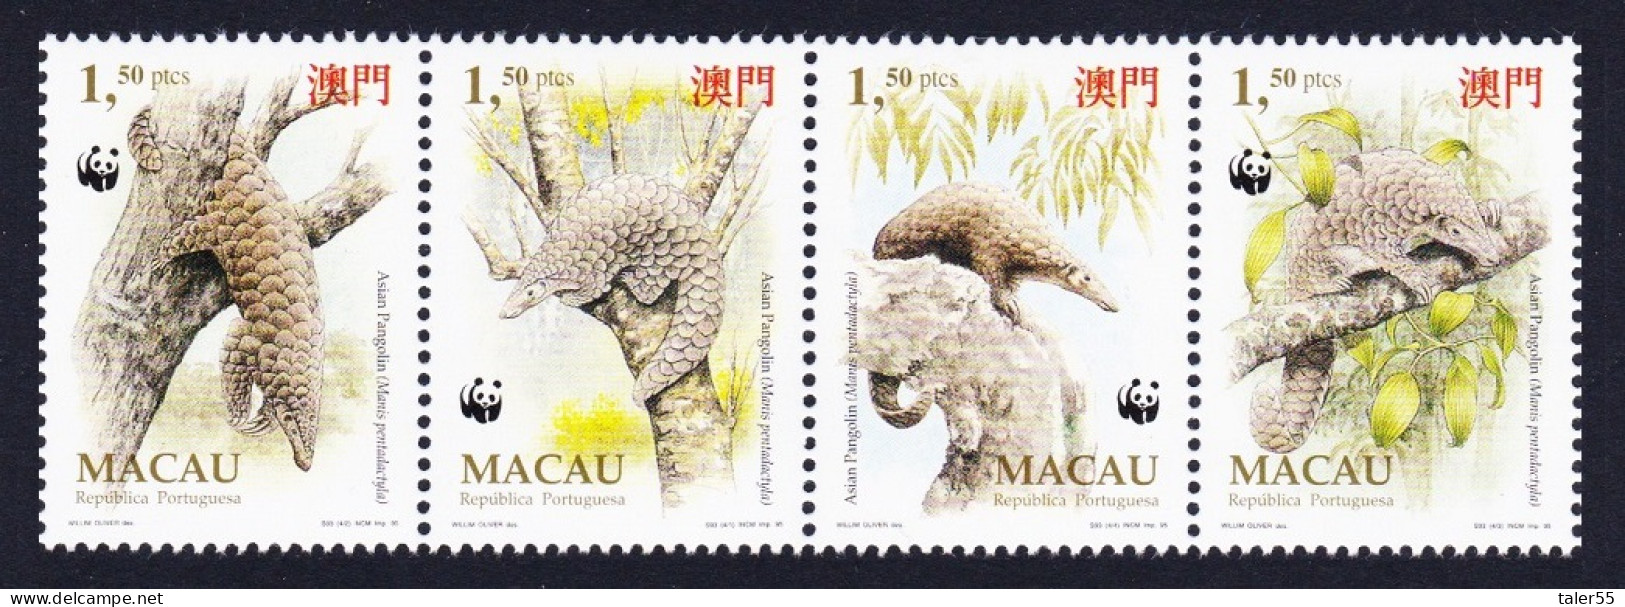 Macao Macau WWF Chinese Pangolin 4v Strip 1995 MNH SG#880-883 MI#795-798 Sc#767-770 - Unused Stamps